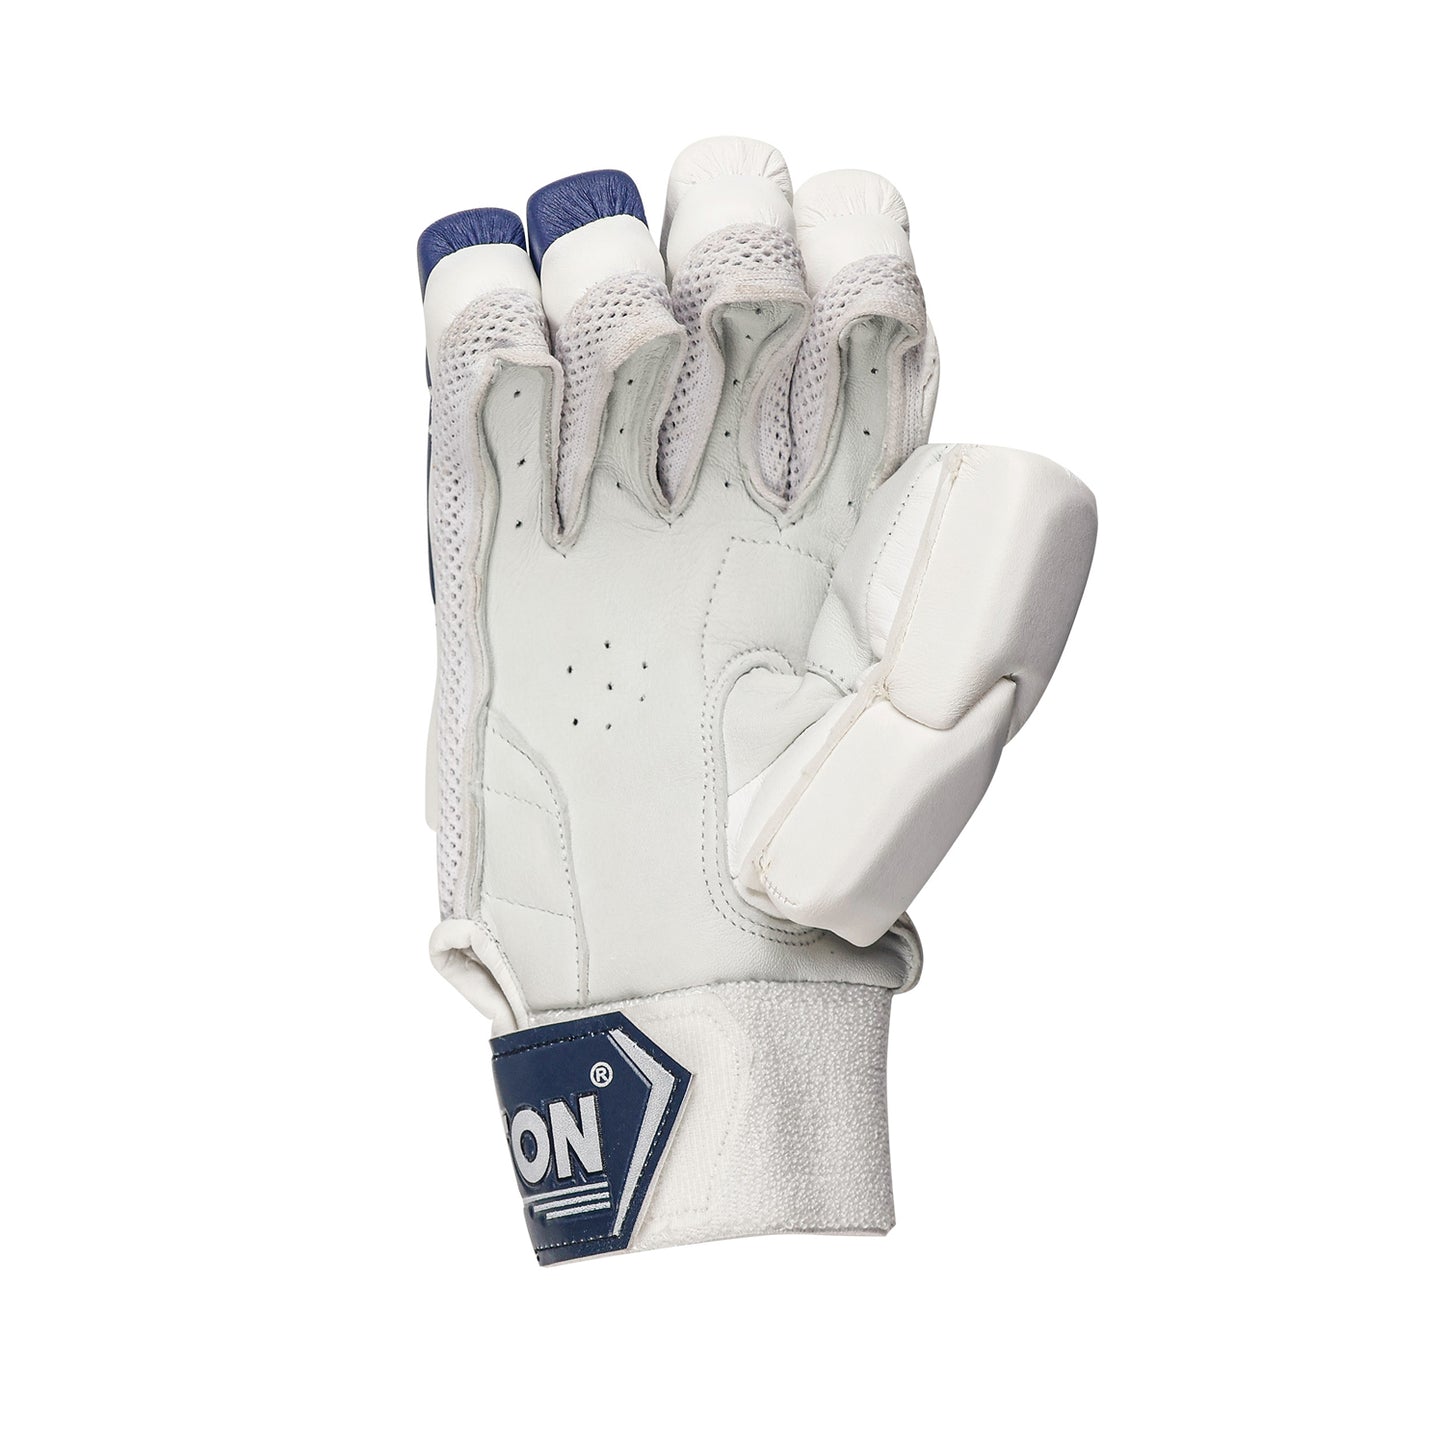 SS Ton Vertu New RH Cricket Batting Gloves - Adult - Best Price online Prokicksports.com